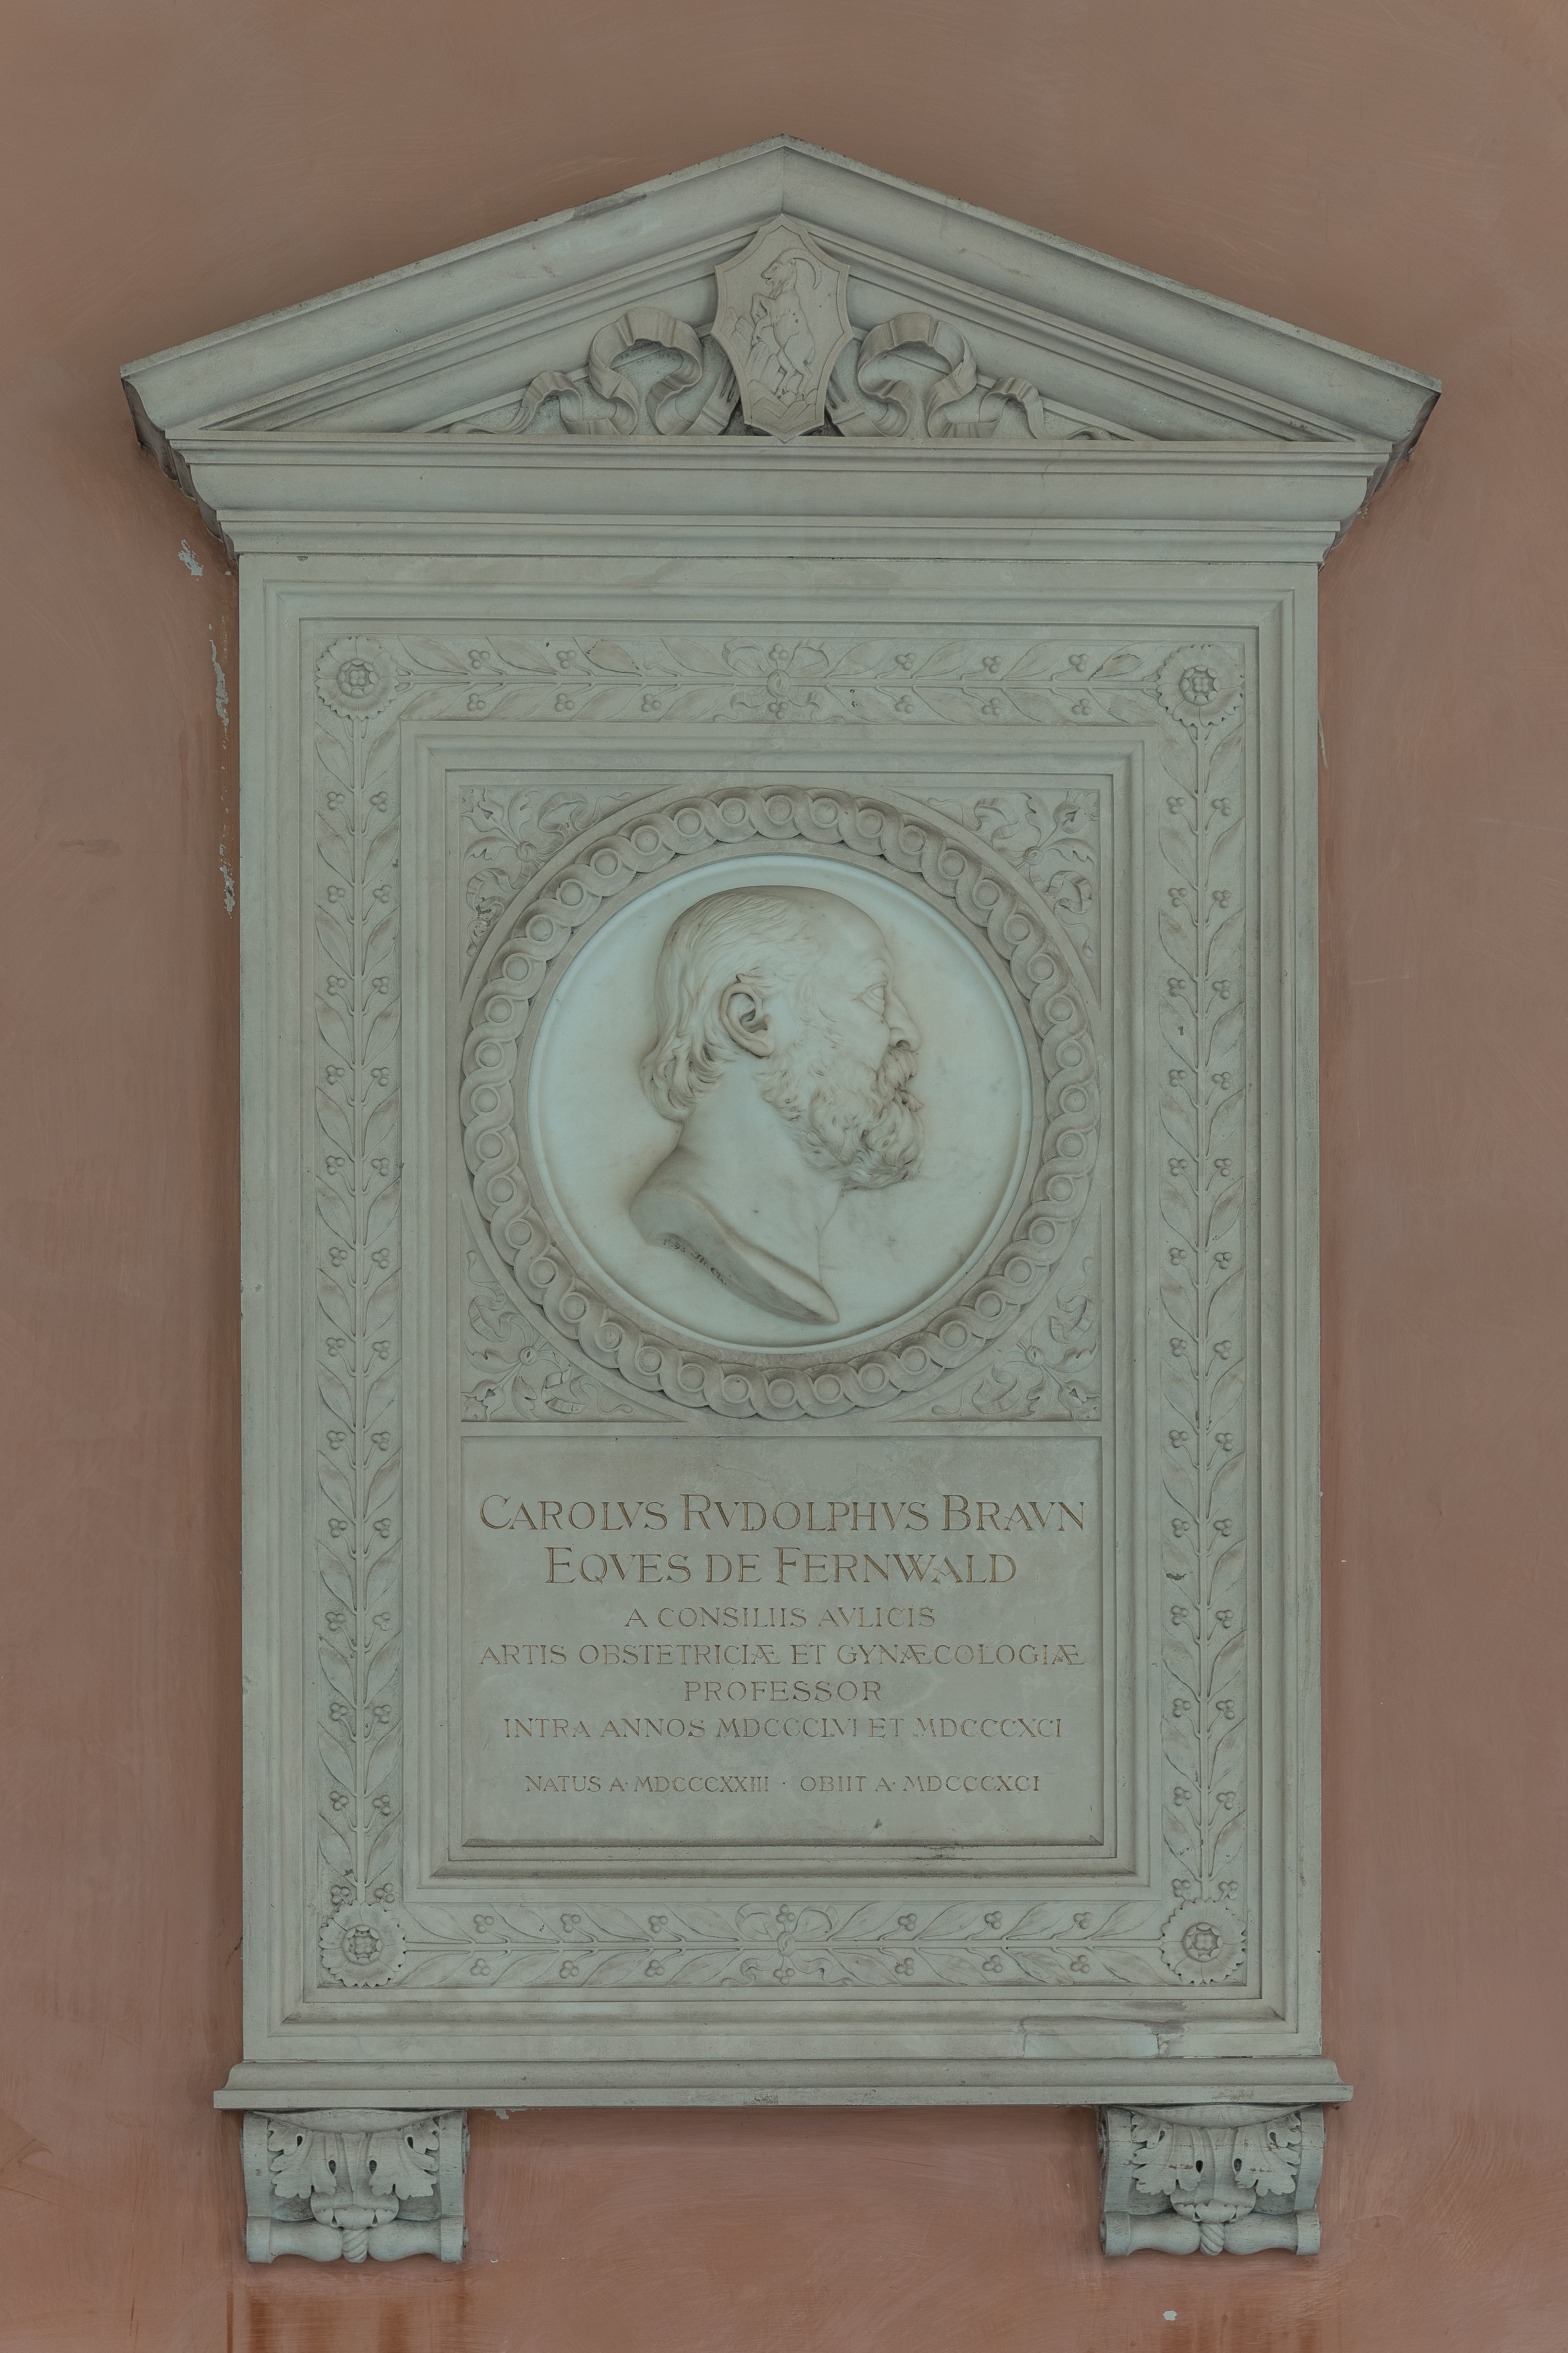 Carl Braun von Fernwald (1823-1891), Nr. 114, plaque and basrelief (marble) in the Arkadenhof of the University of Vienna-2712-HDR